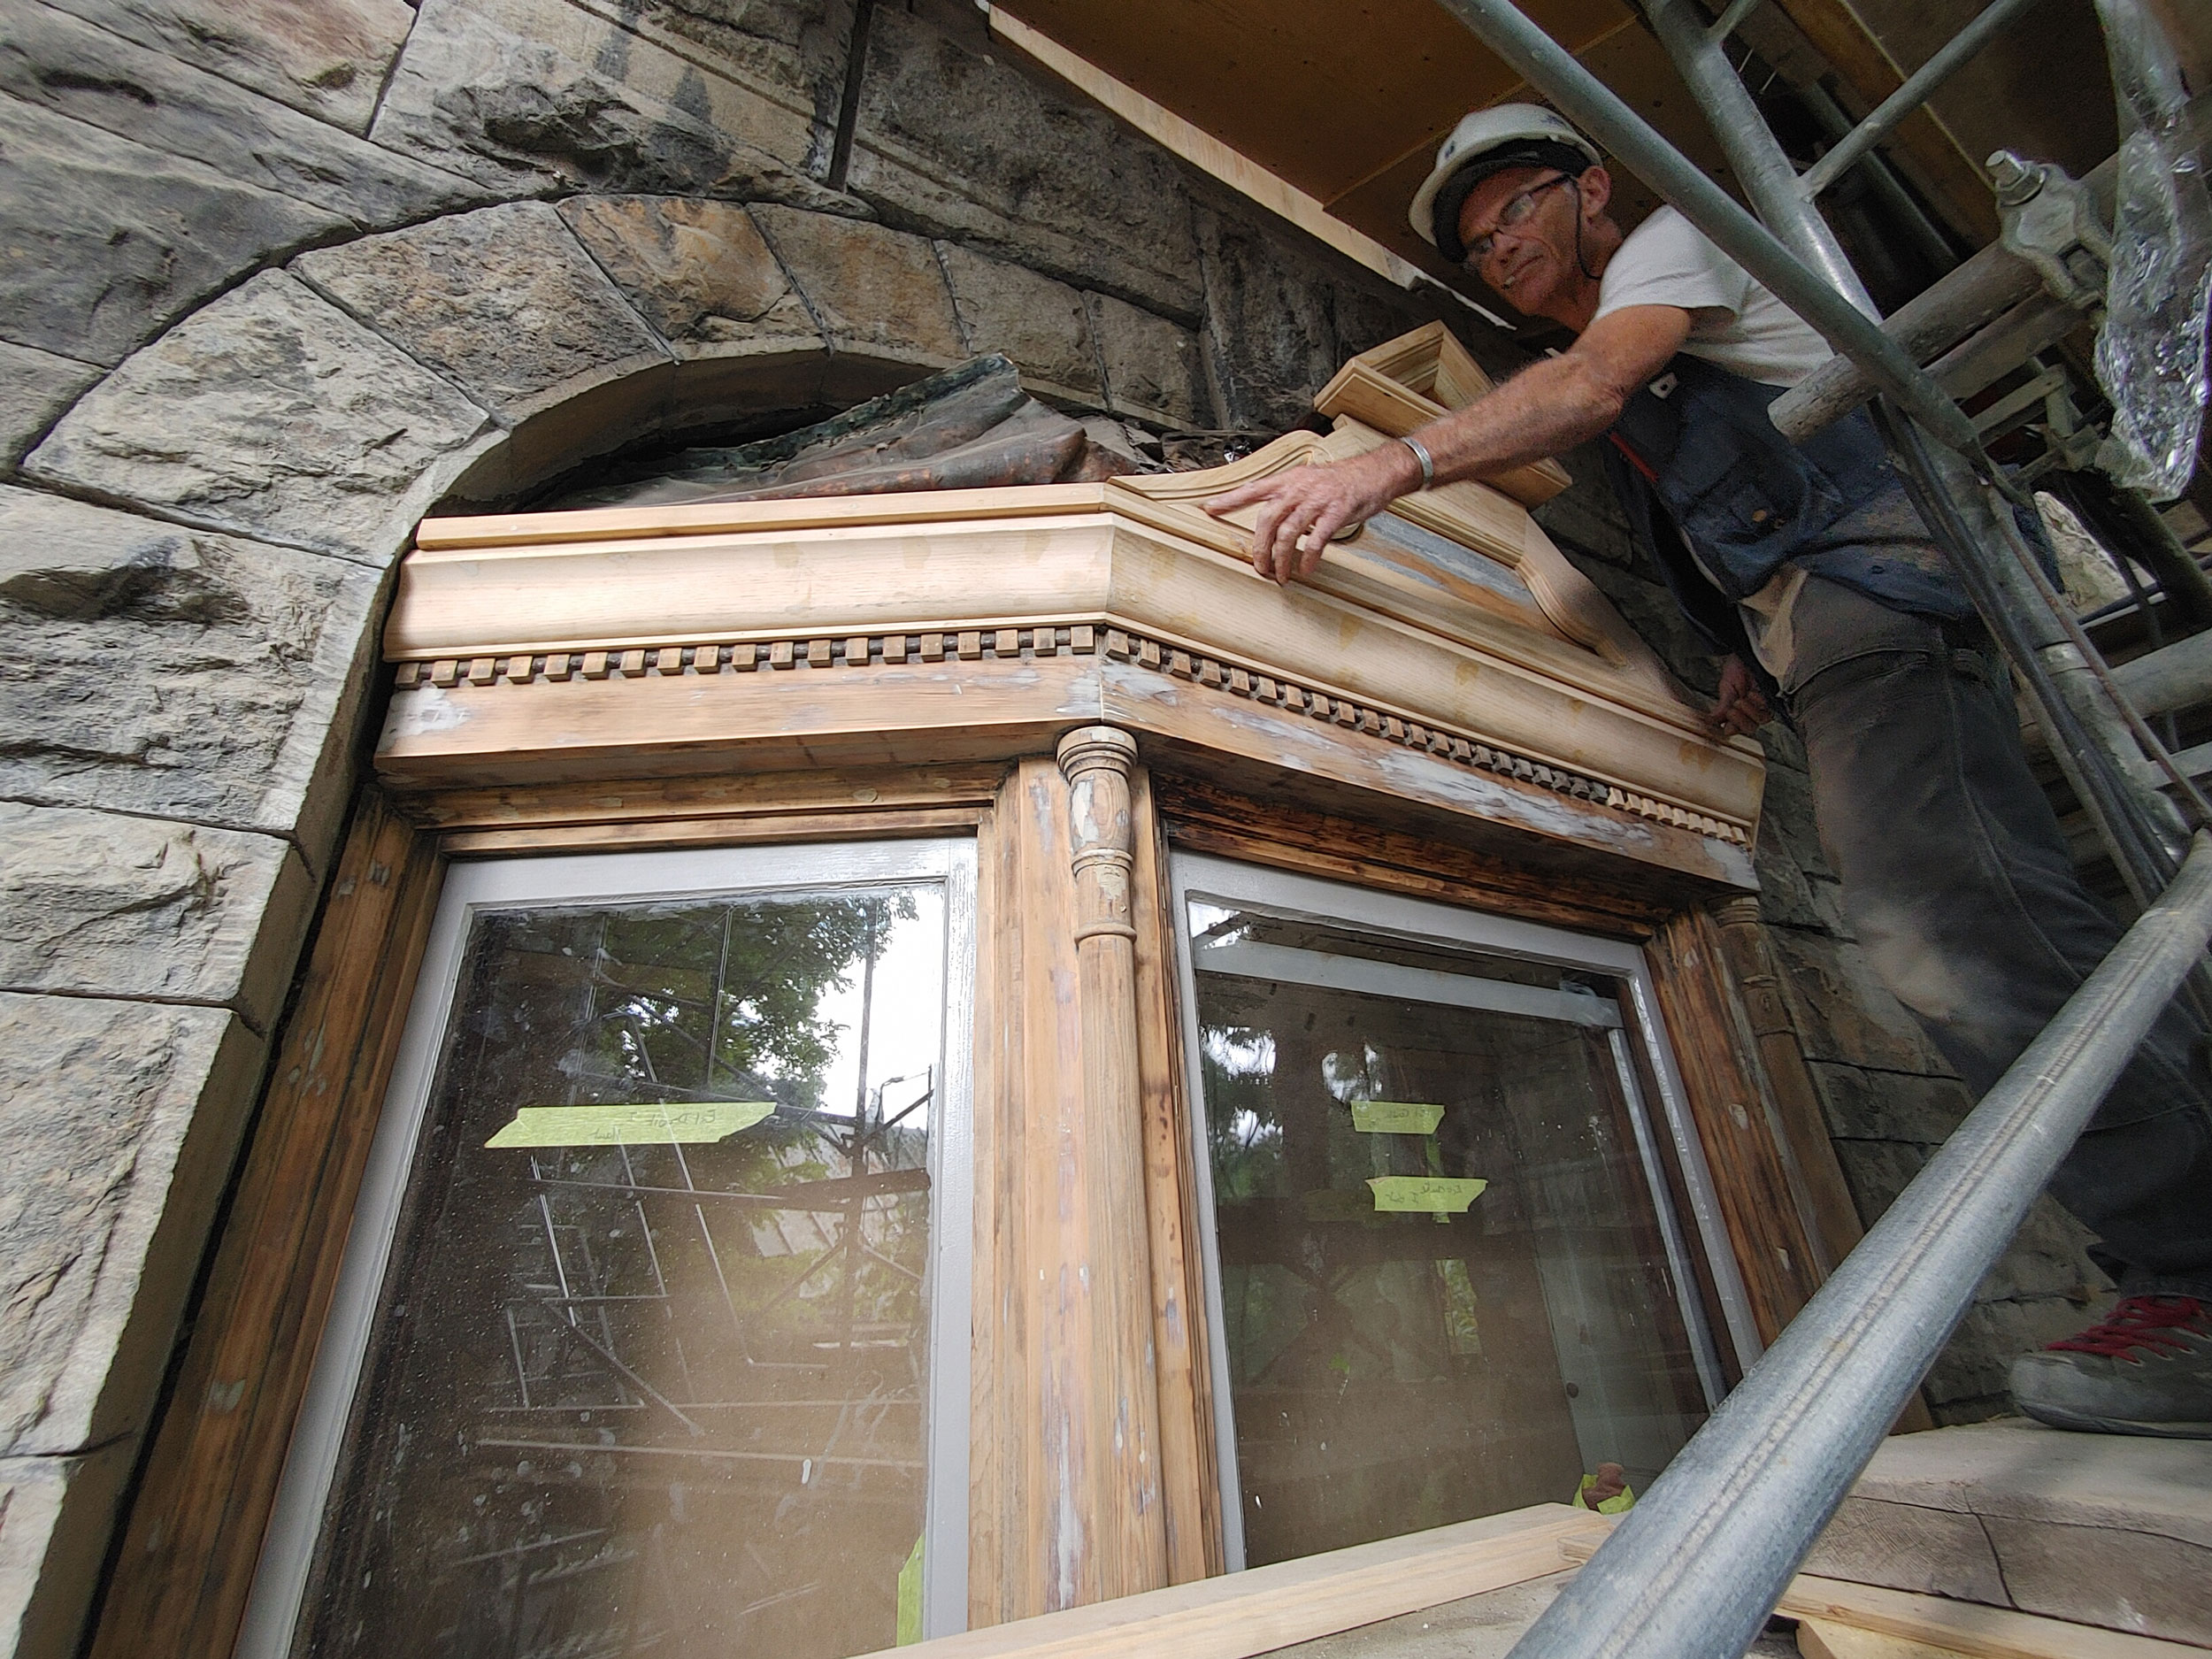 restoration in progress of landmark wooden bay window